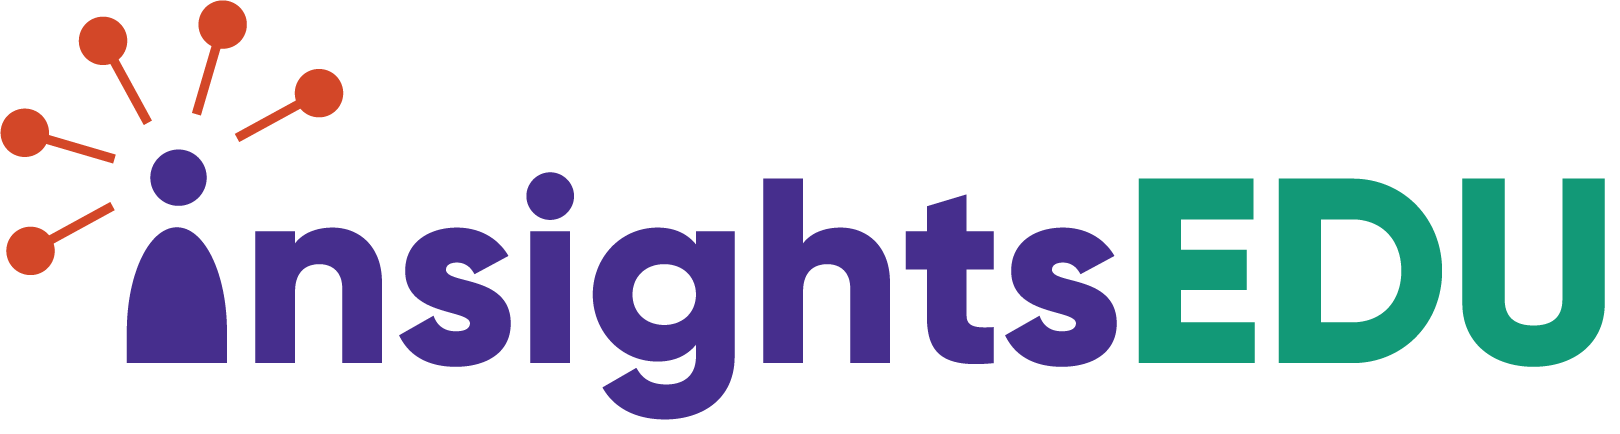 Insights logo 4C.png